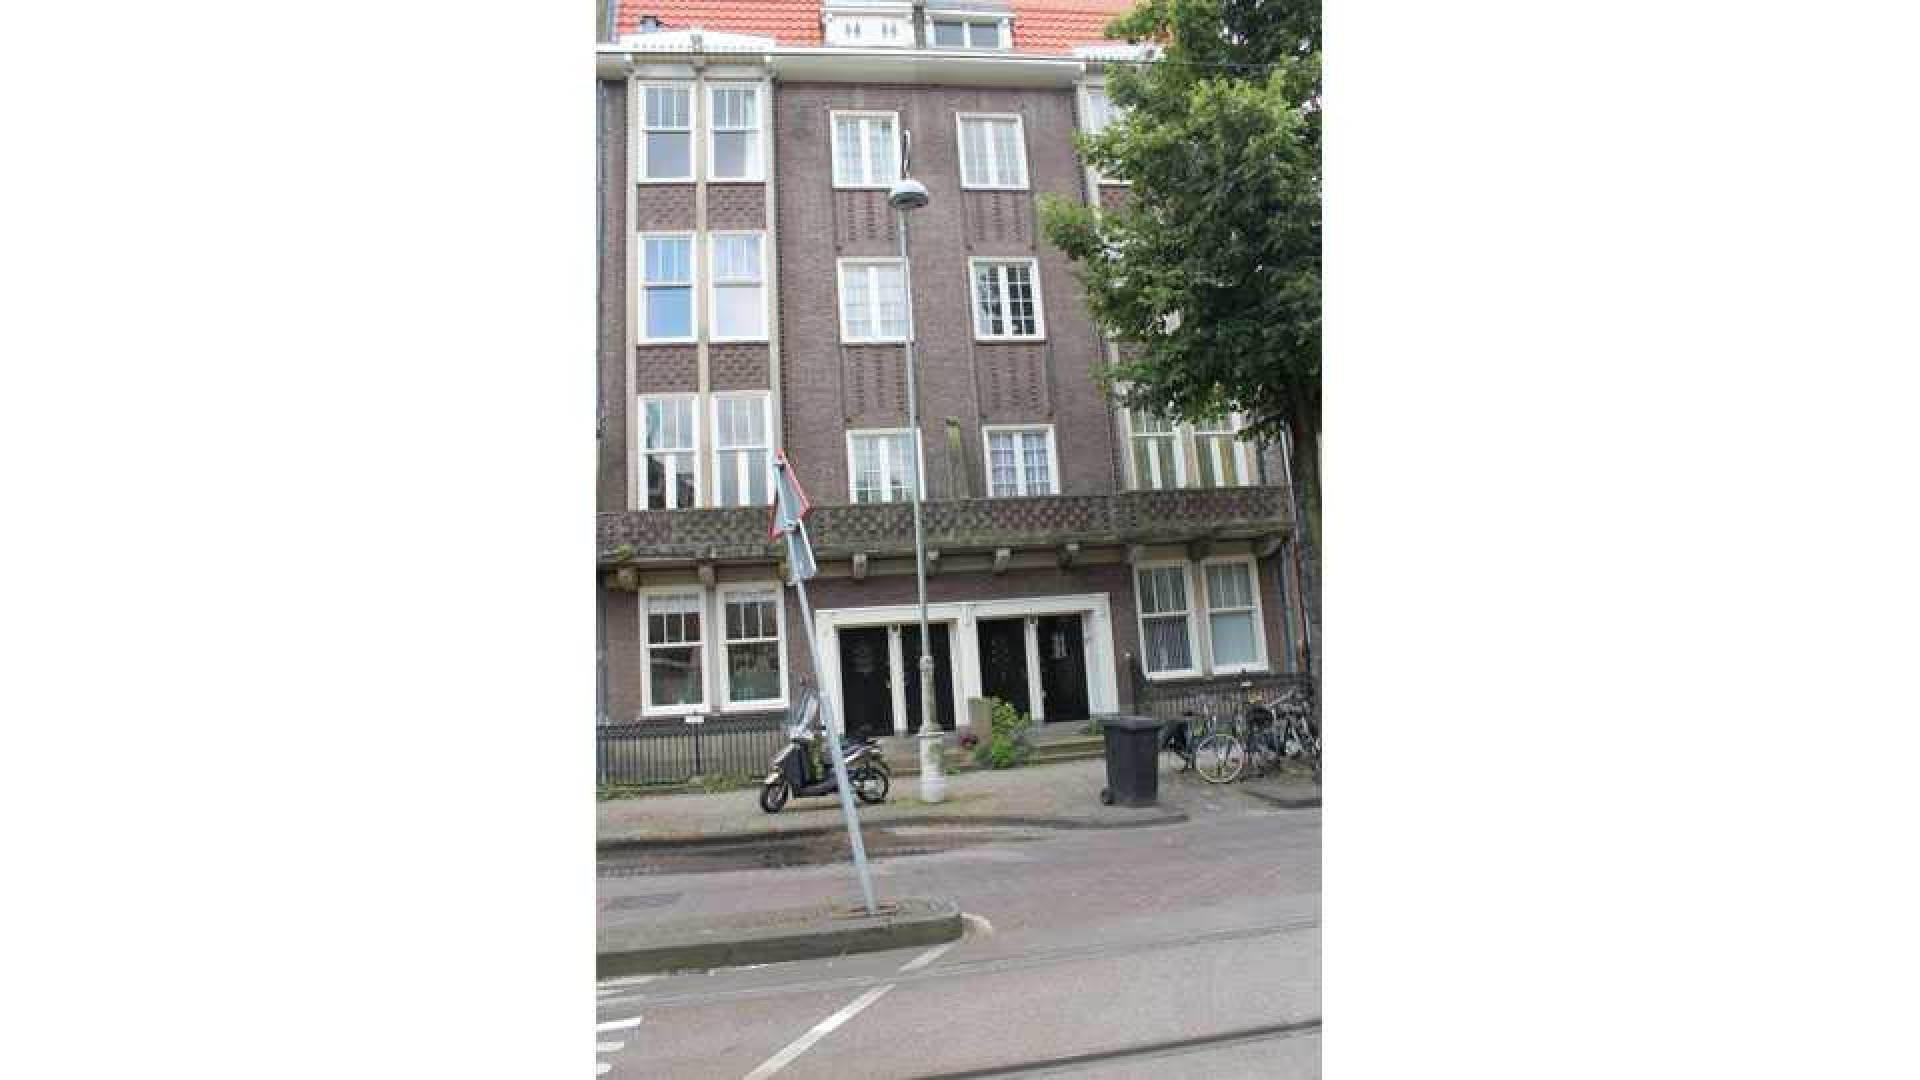 Dave Roelvink huurt appartement in Amsterdam Oud-Zuid. Zie foto's 17